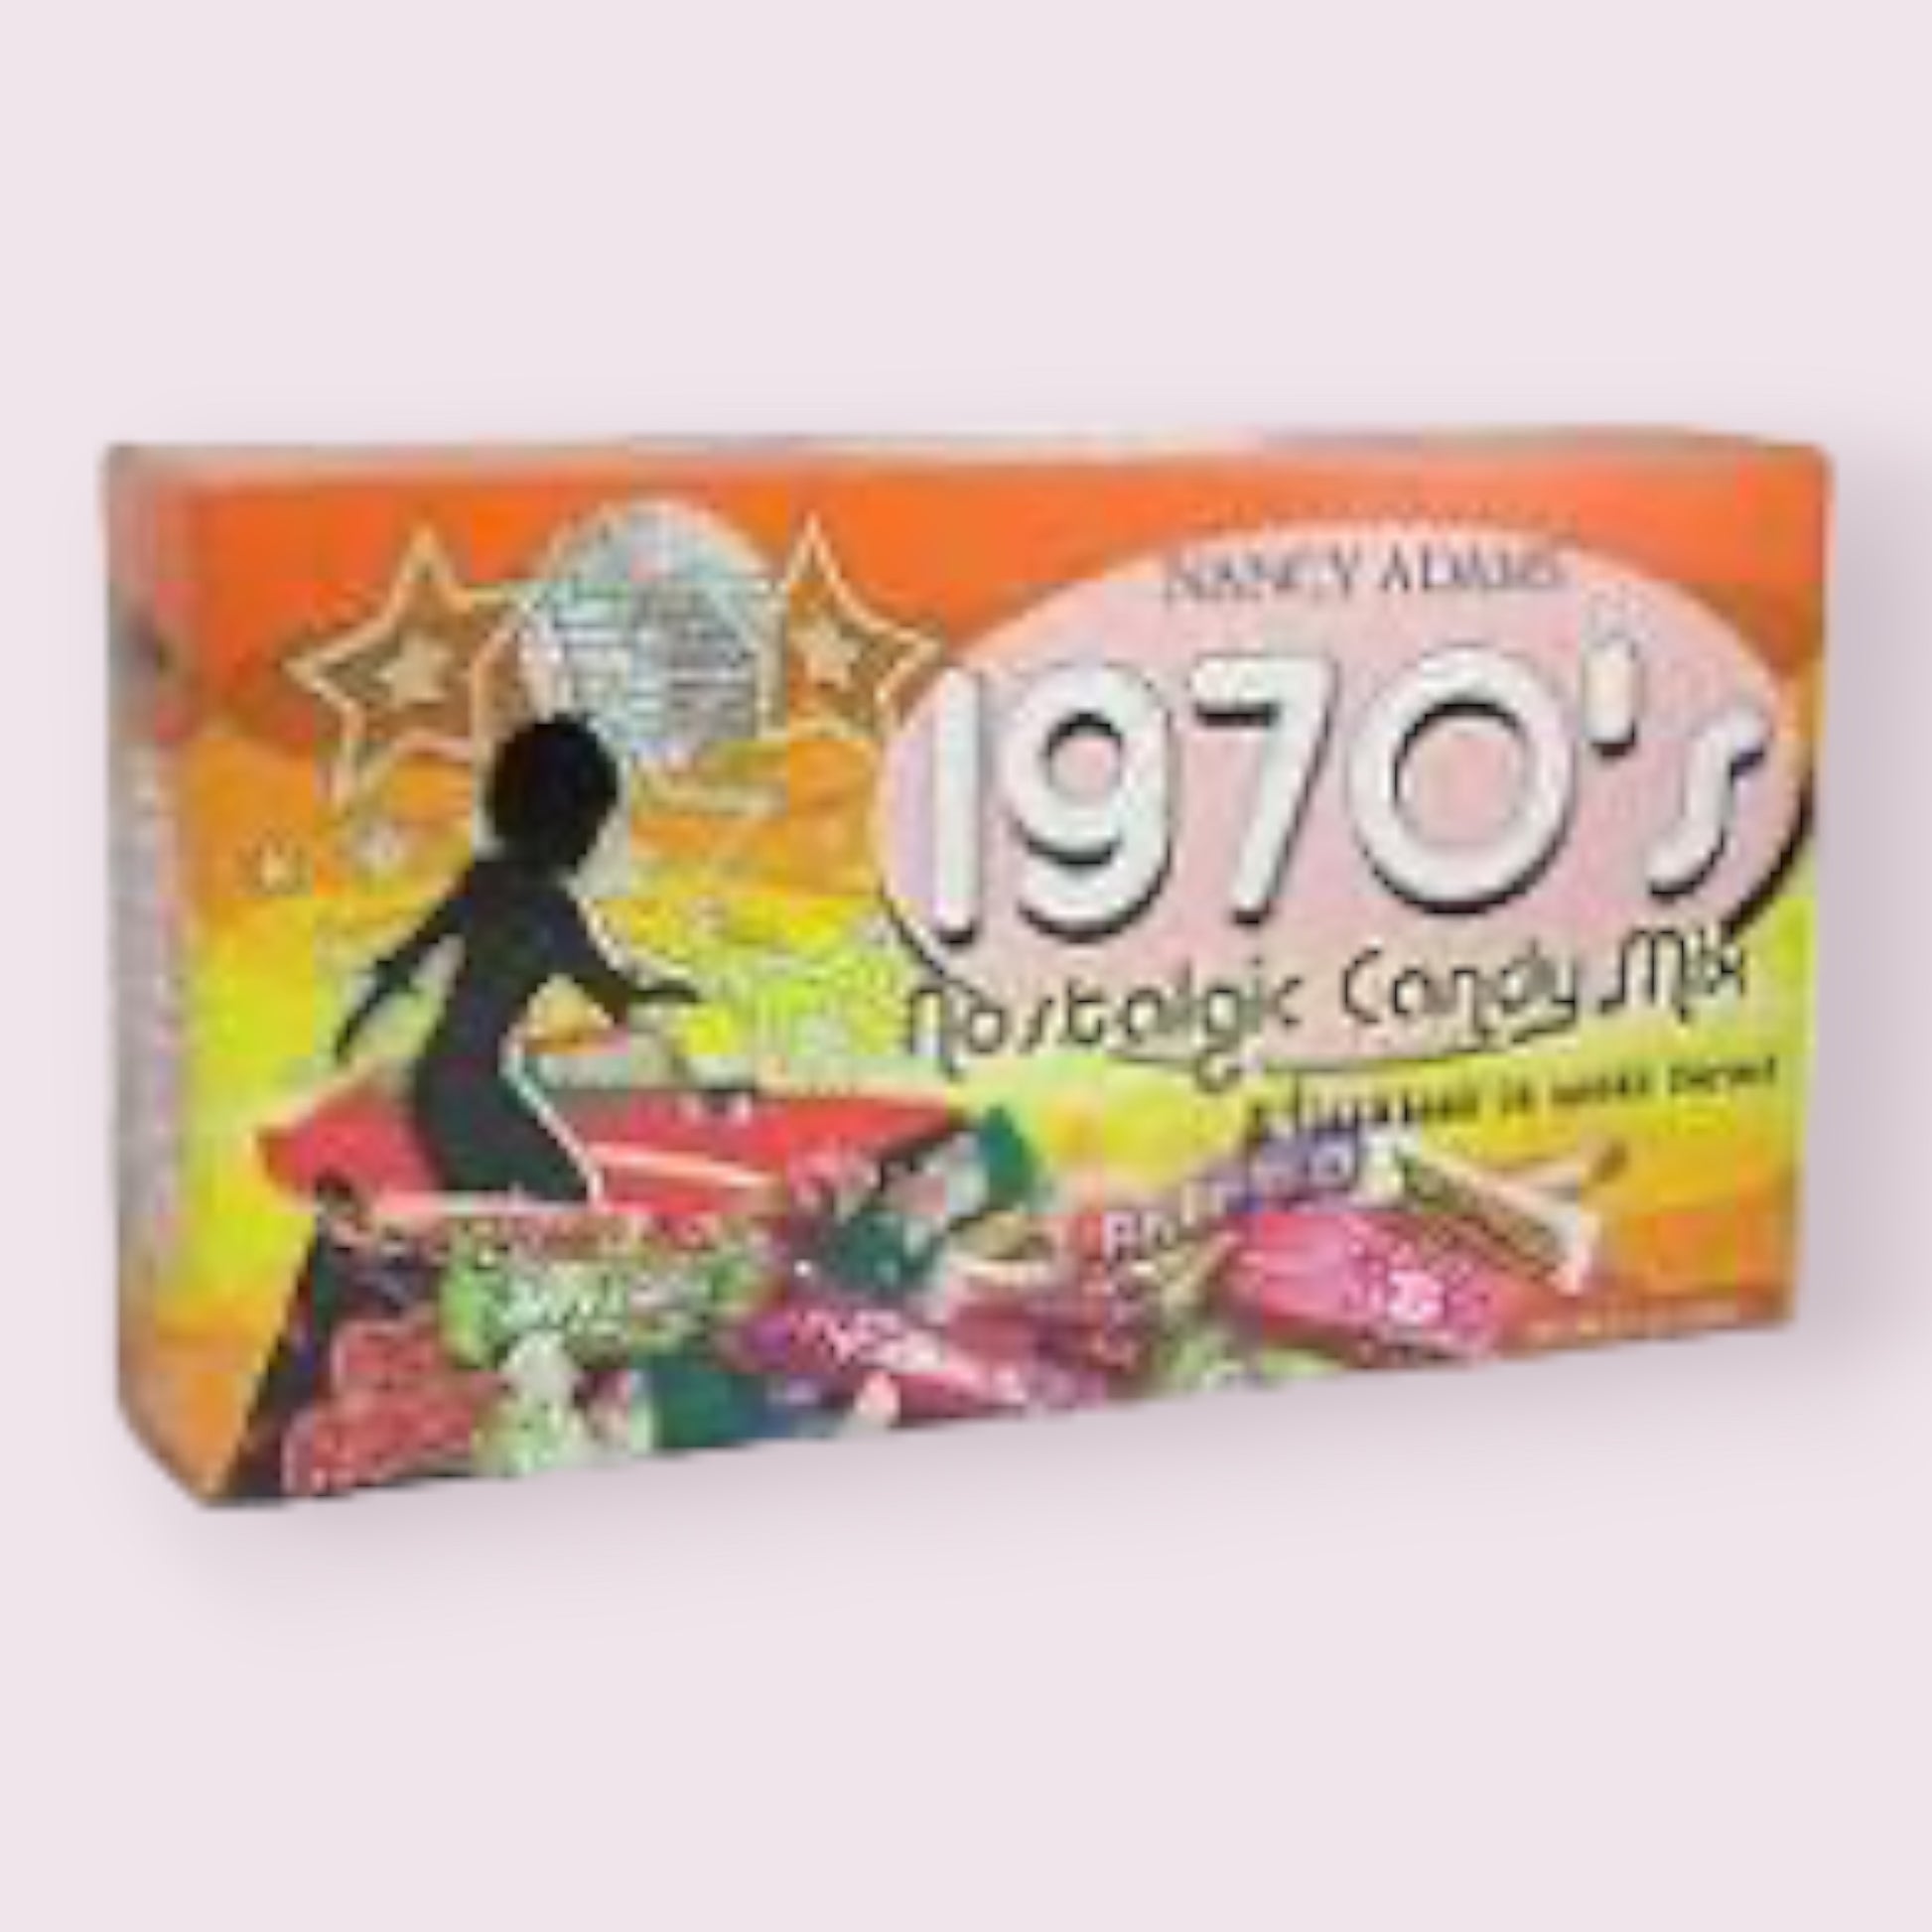 Nostalgic Candy Mix 1970’s  Pixie Candy Shoppe   